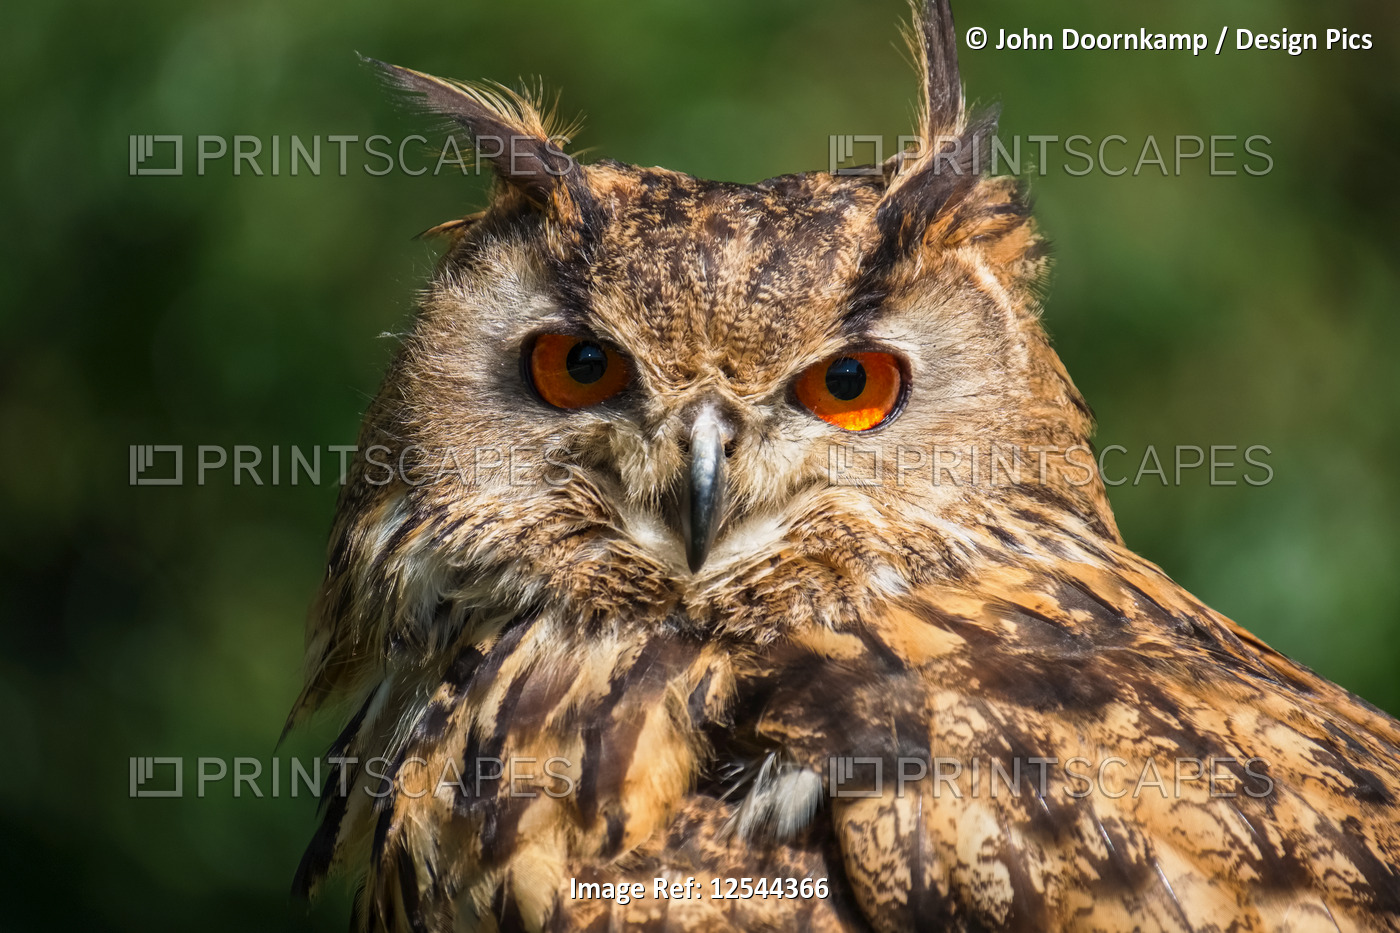 PORTRAIT OF A EUROPEAN EAGLE OWL